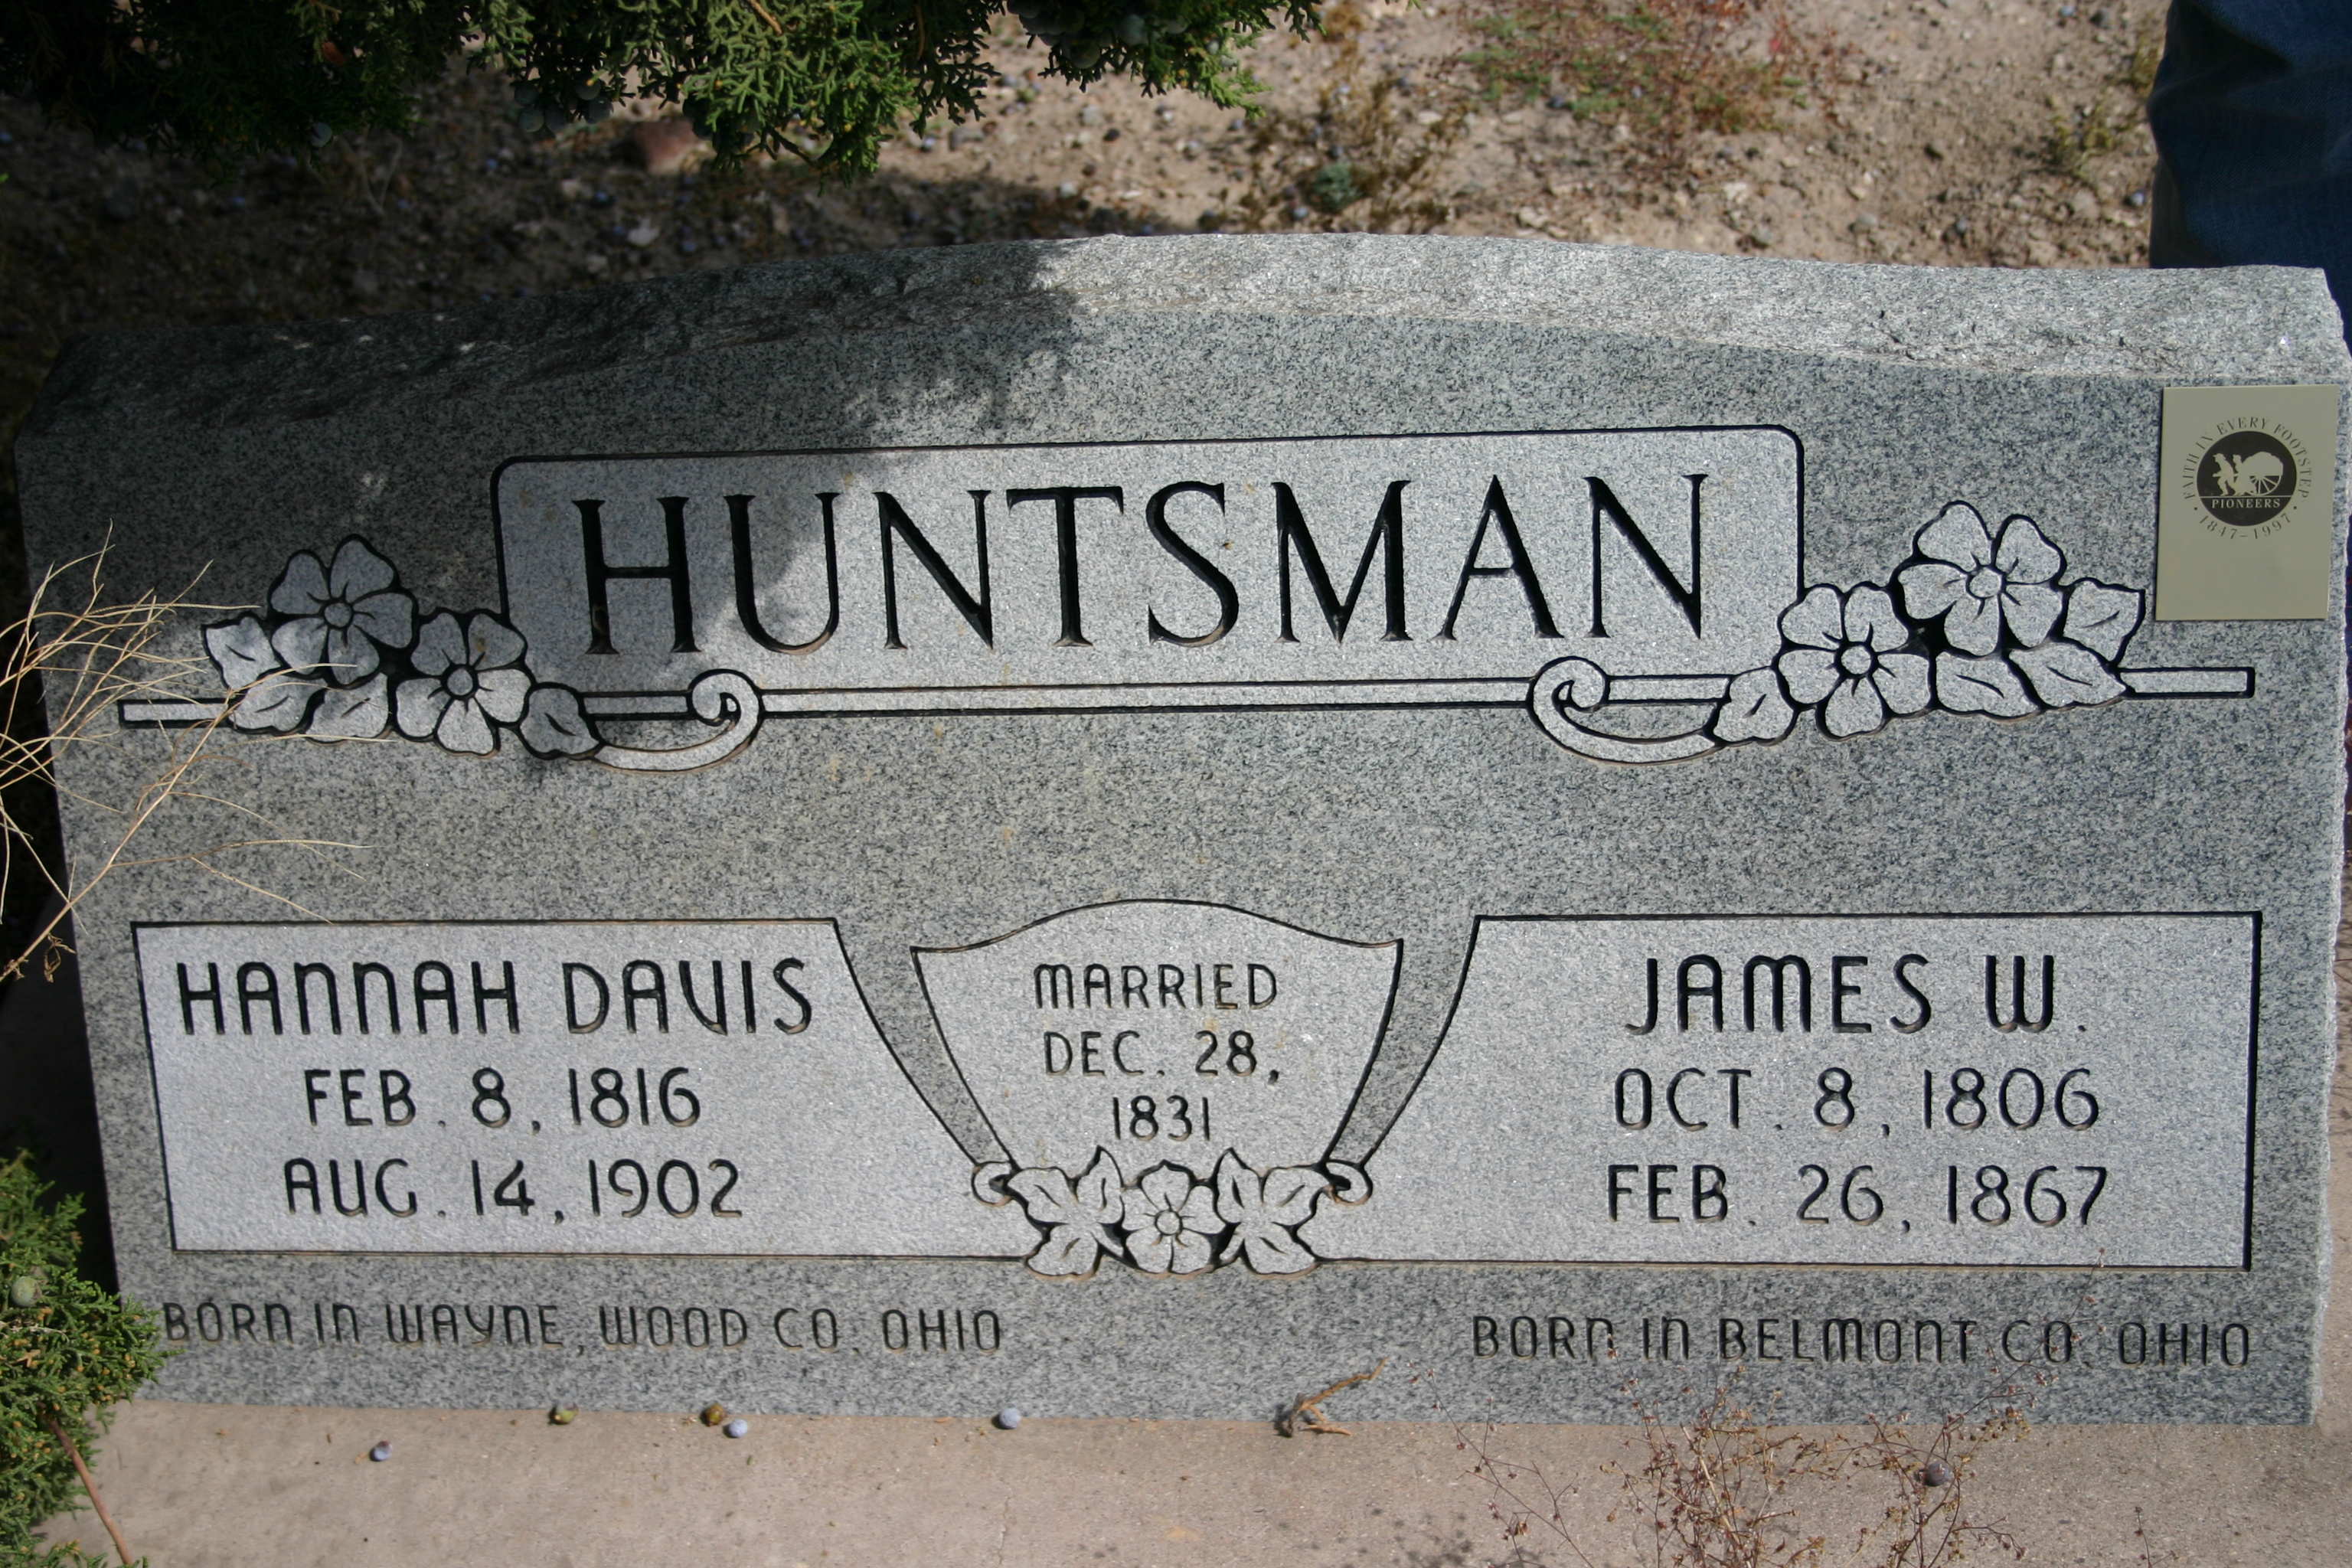 James W. & Hannah Davis Huntsman gravestone at the Hebron Cemetery